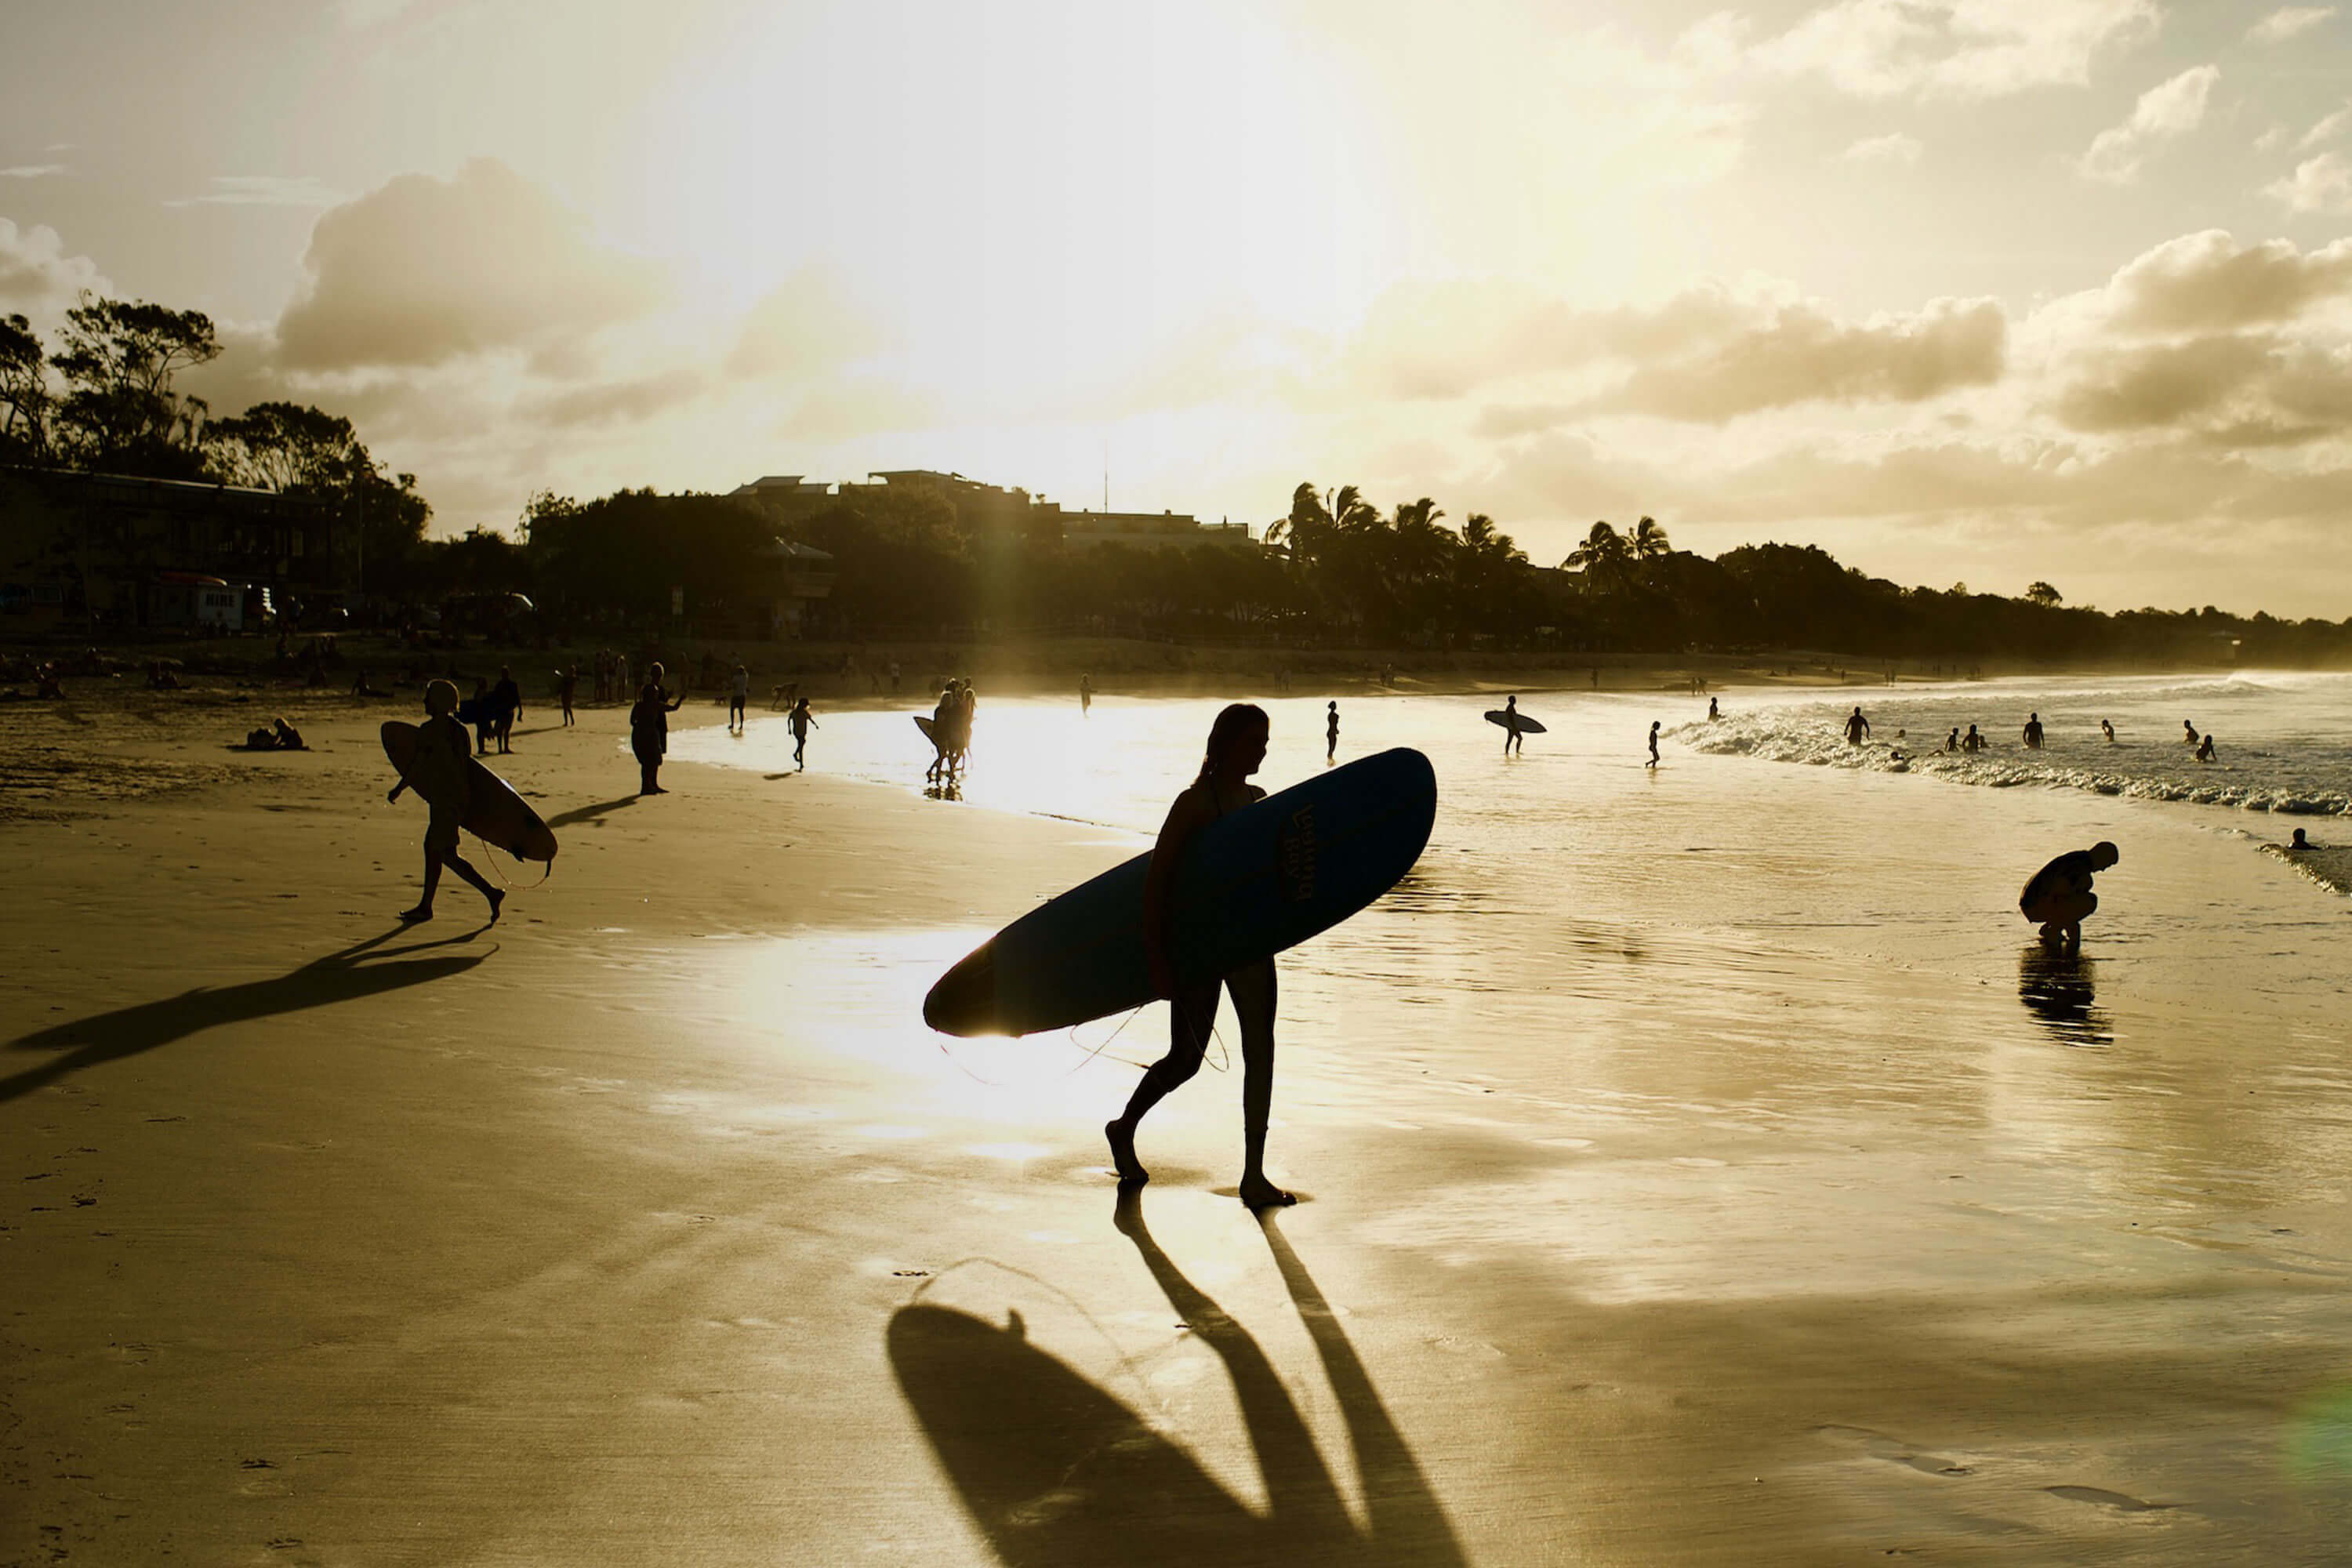 Surfers walk along a beach during the golden hour of sunset.